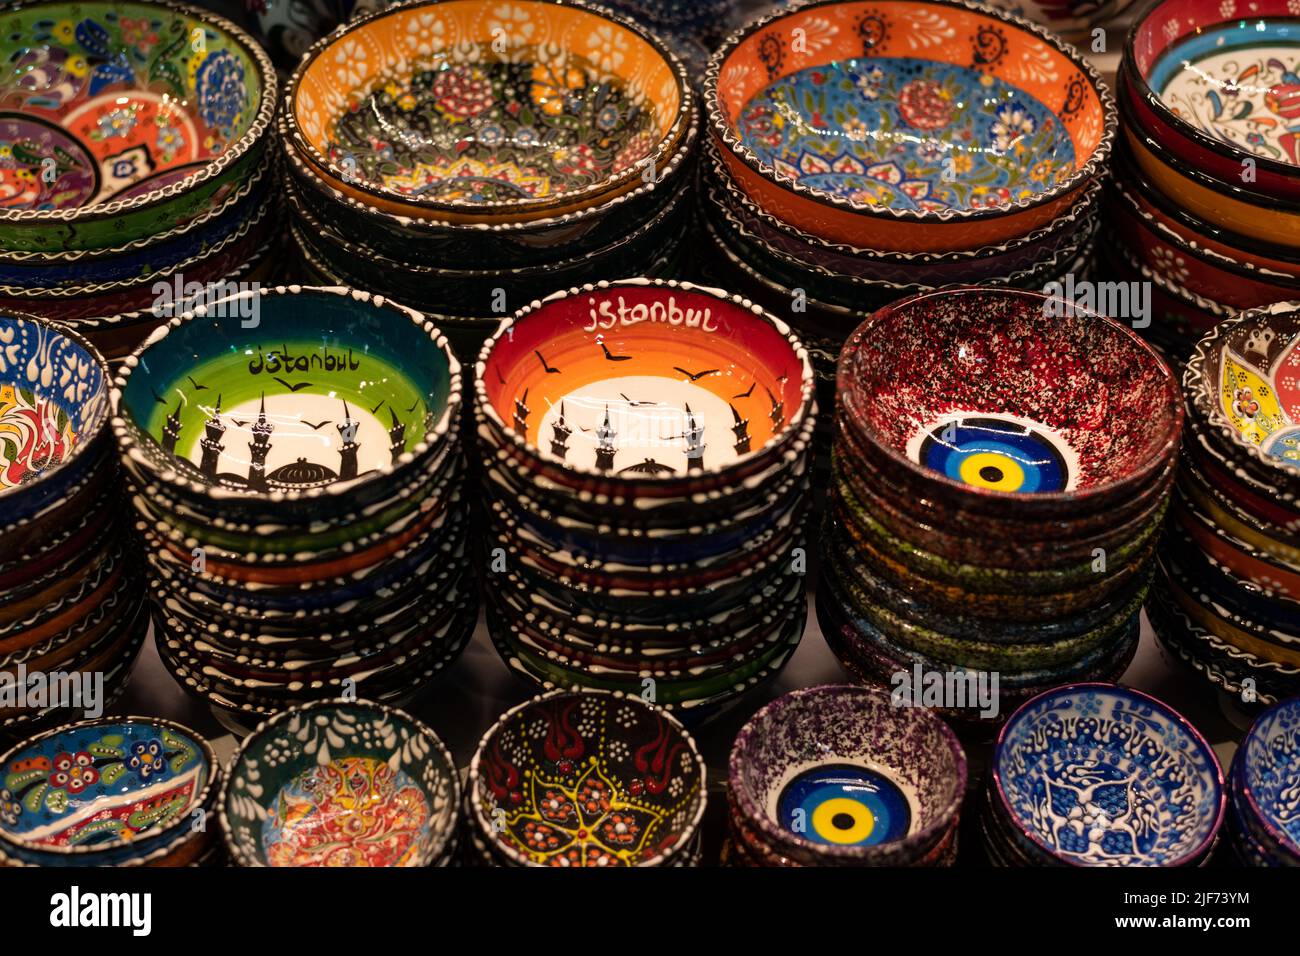 Istanbul Souvenirs - Keramikschalen im Iznik-Stil - großer Basar, Istanbul, Türkei Stockfoto